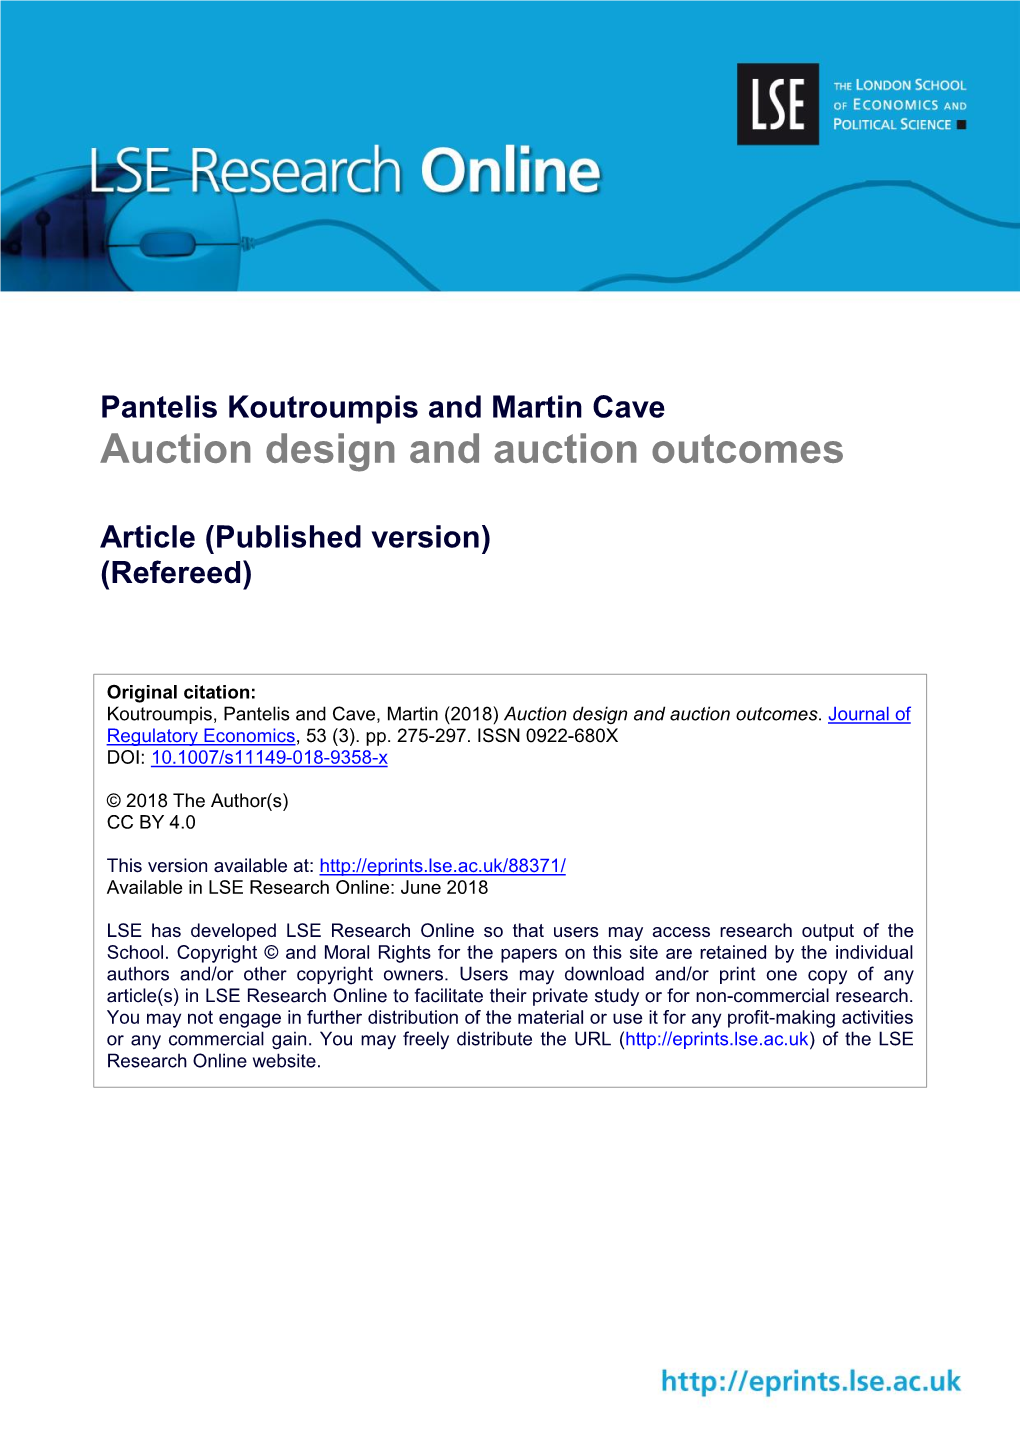 Pantelis Koutroumpis and Martin Cave Auction Design and Auction Outcomes